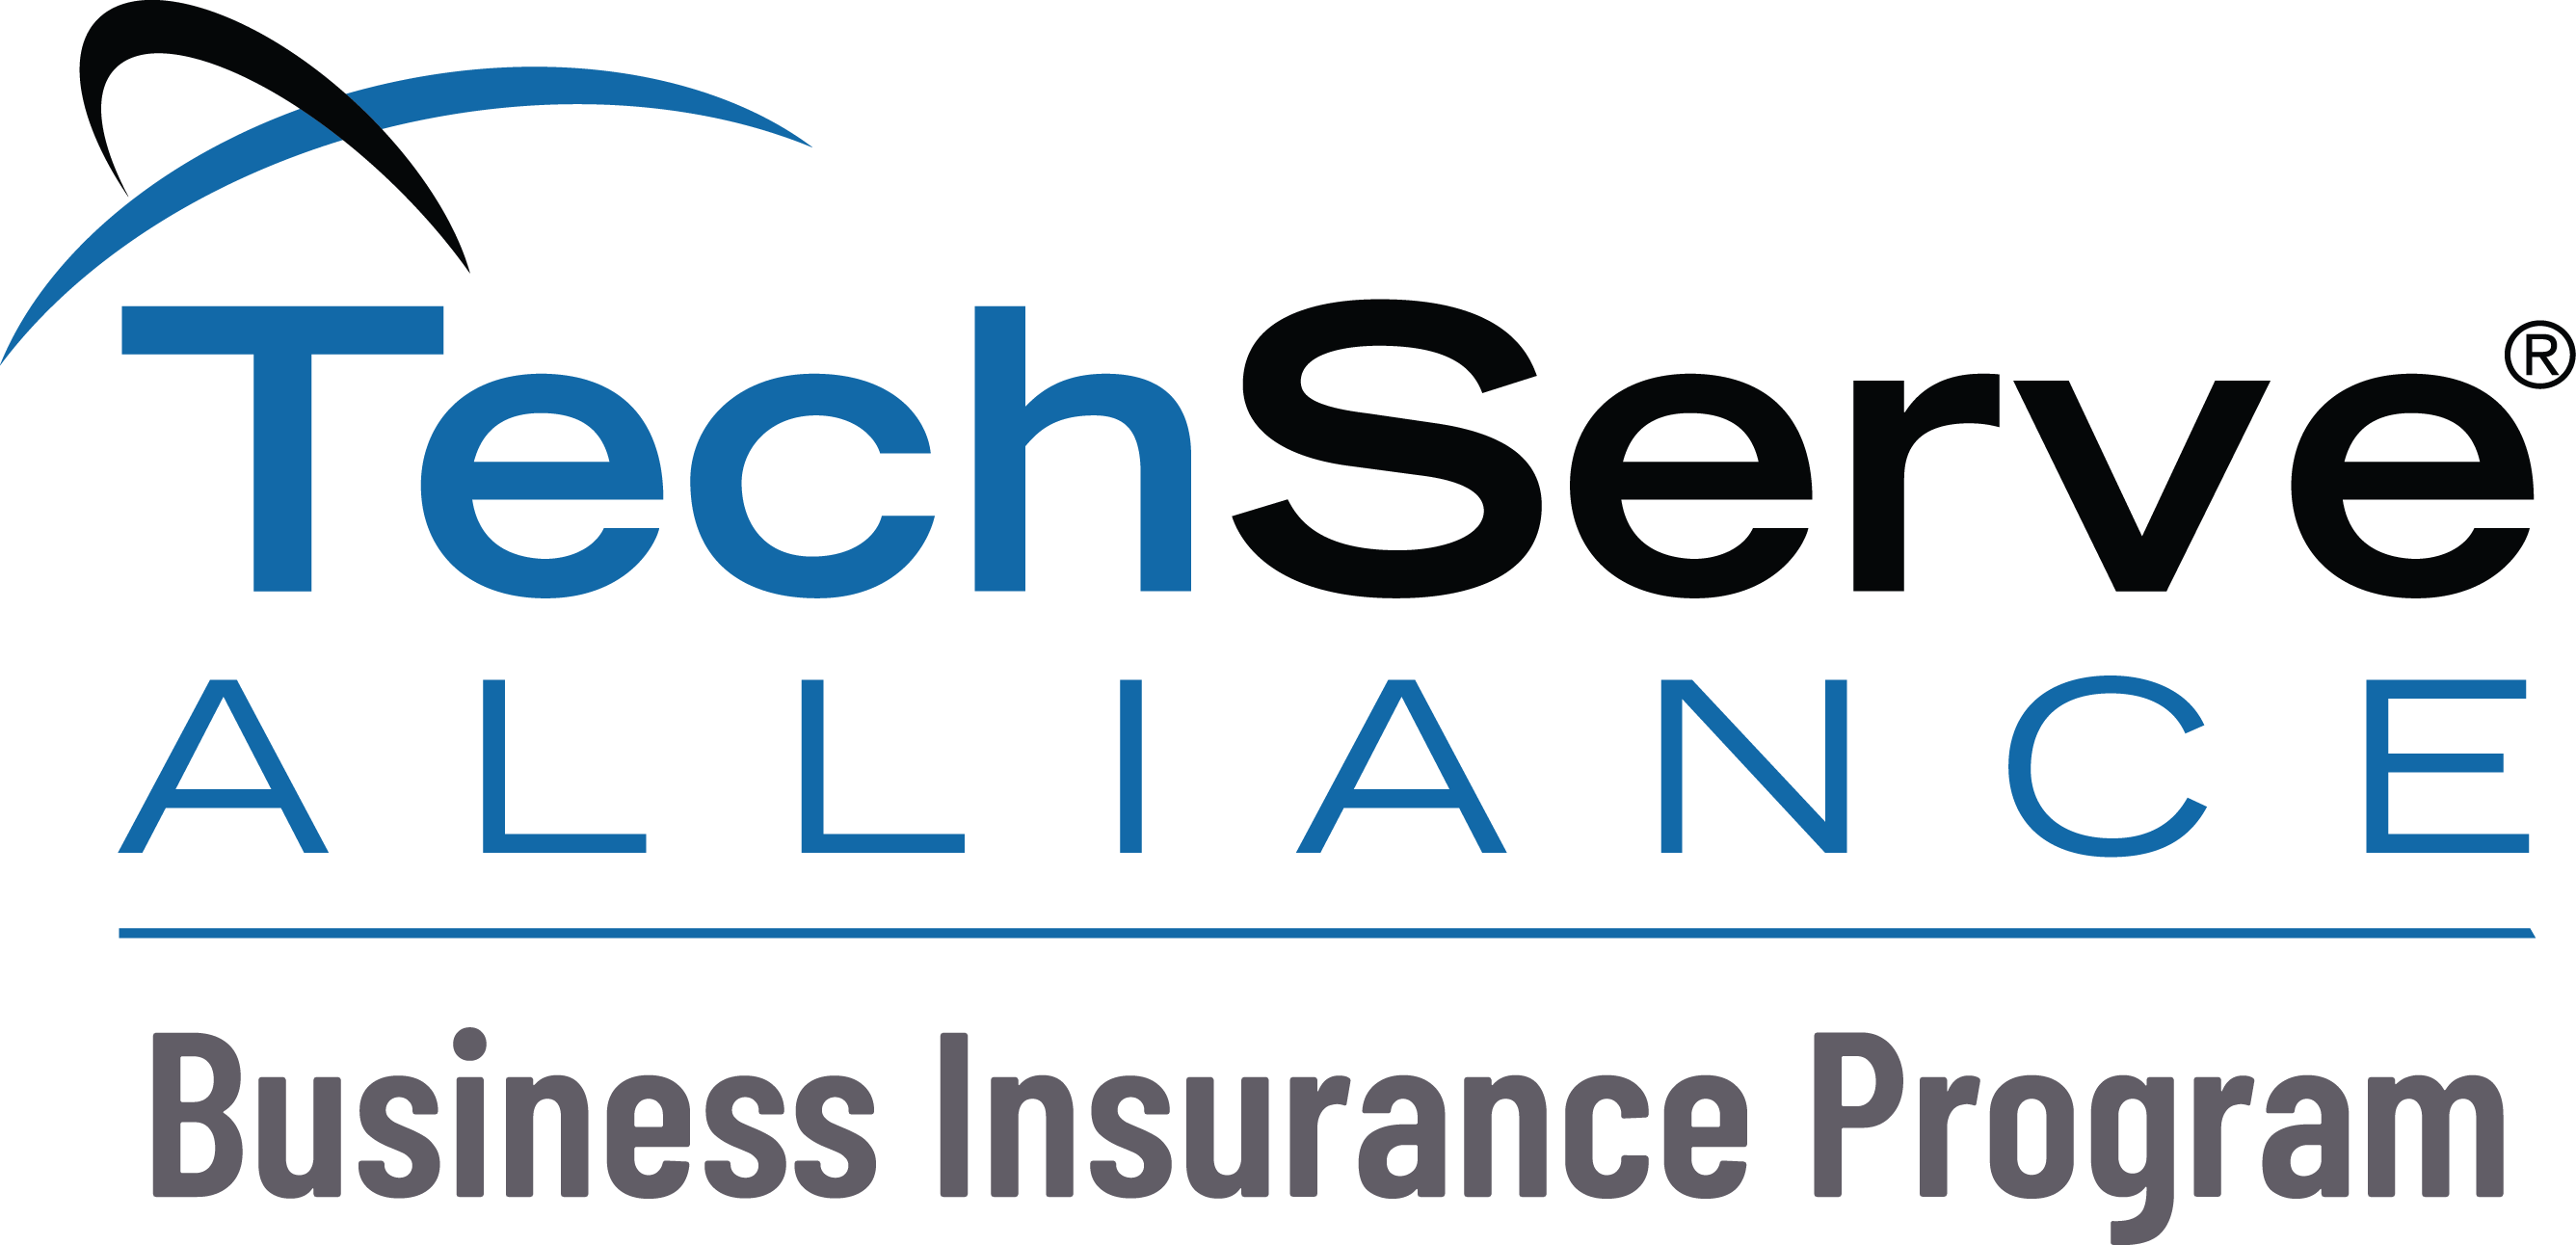 TSA - Business Insurance Program - Logo